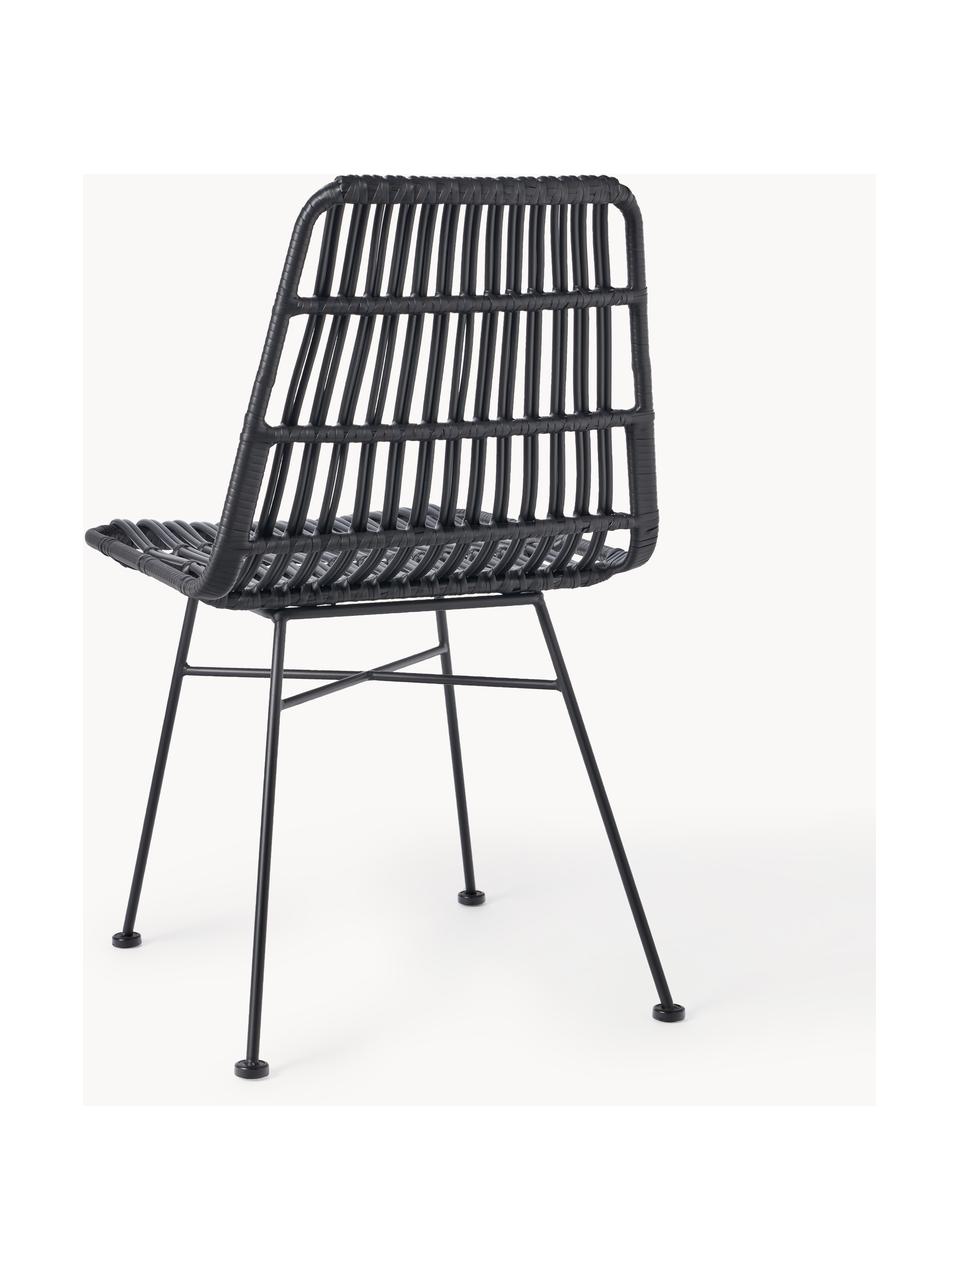 Polyrattan-Stühle Costa, 2 Stück, Sitzfläche: Polyethylen-Geflecht, Gestell: Metall, pulverbeschichtet, Schwarz, B 47 x T 61 cm